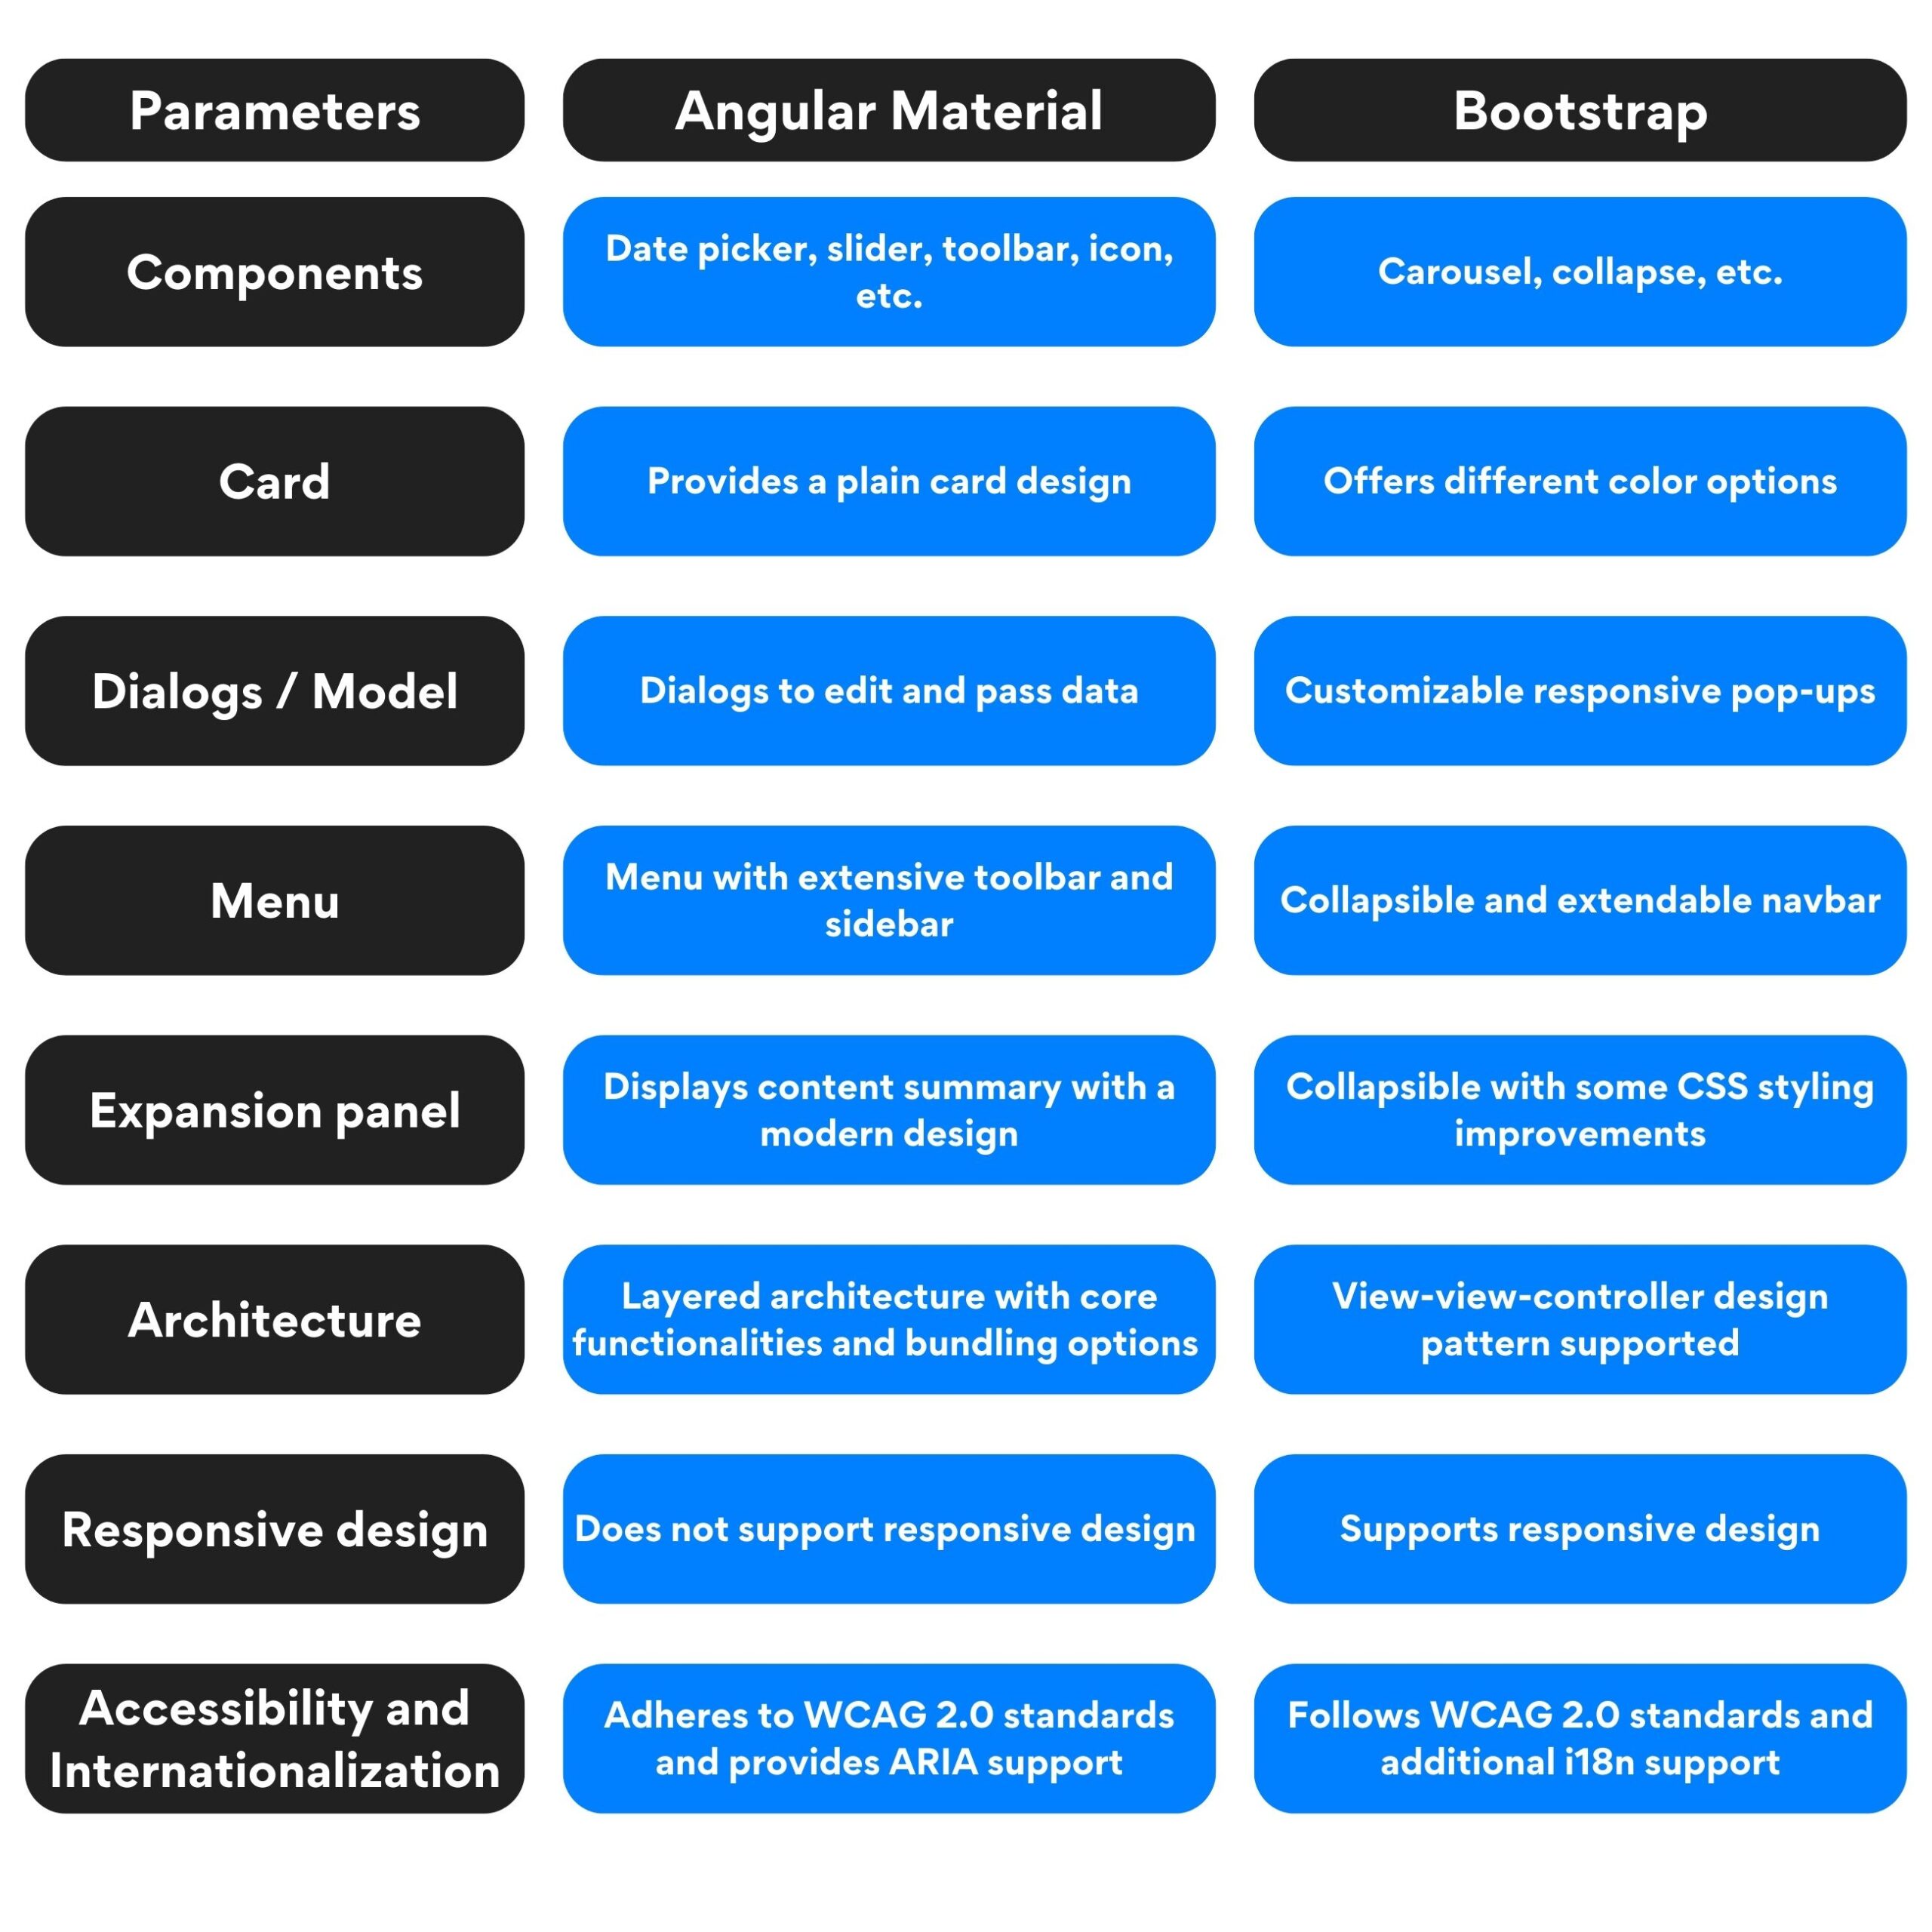 Angular Material vs Bootstrap (2)